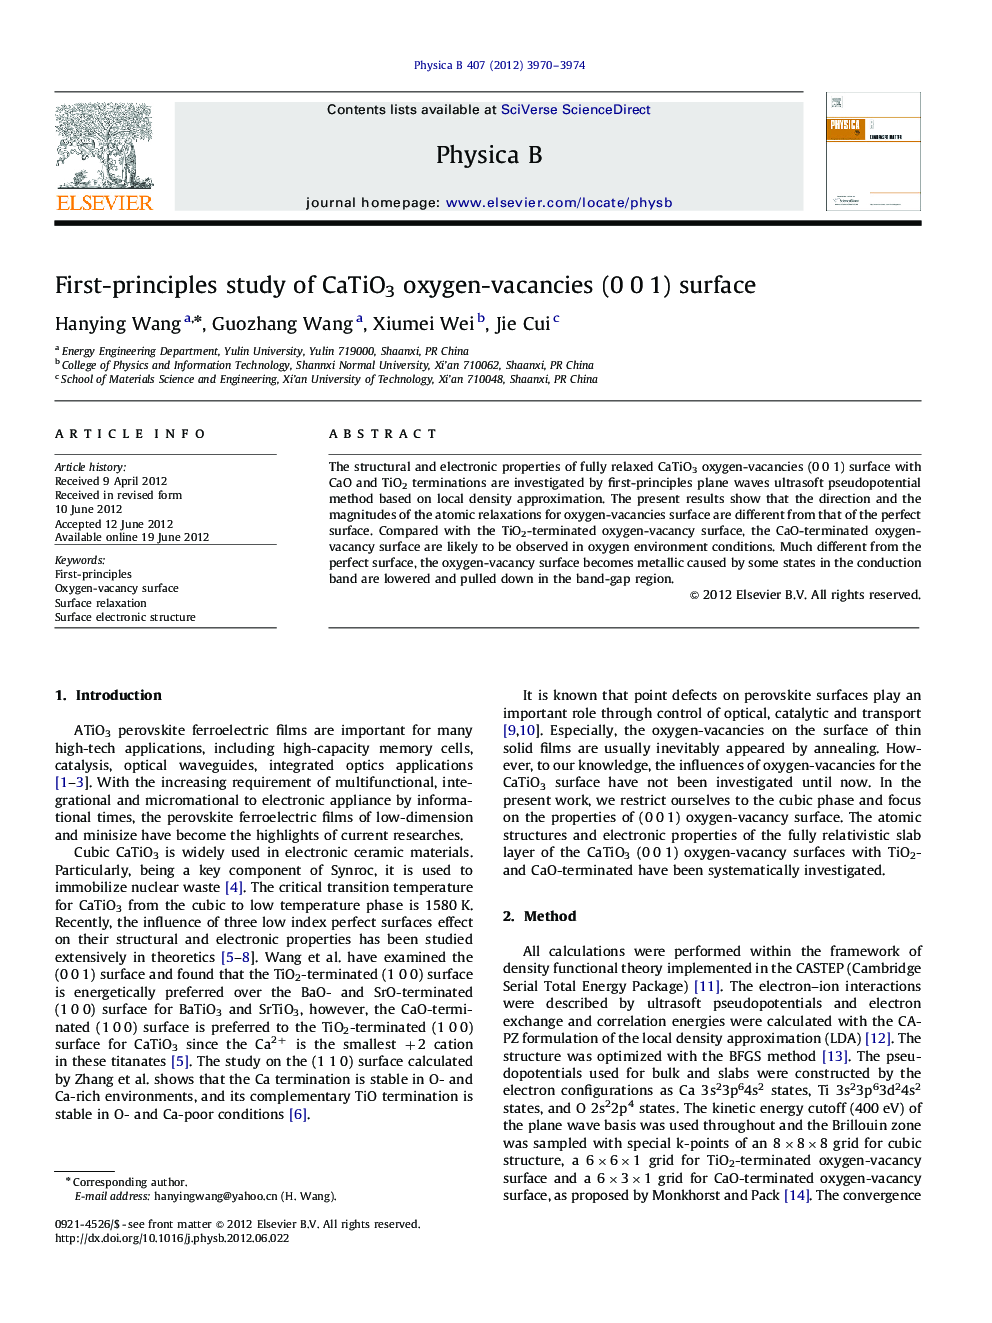 First-principles study of CaTiO3 oxygen-vacancies (0Â 0Â 1) surface